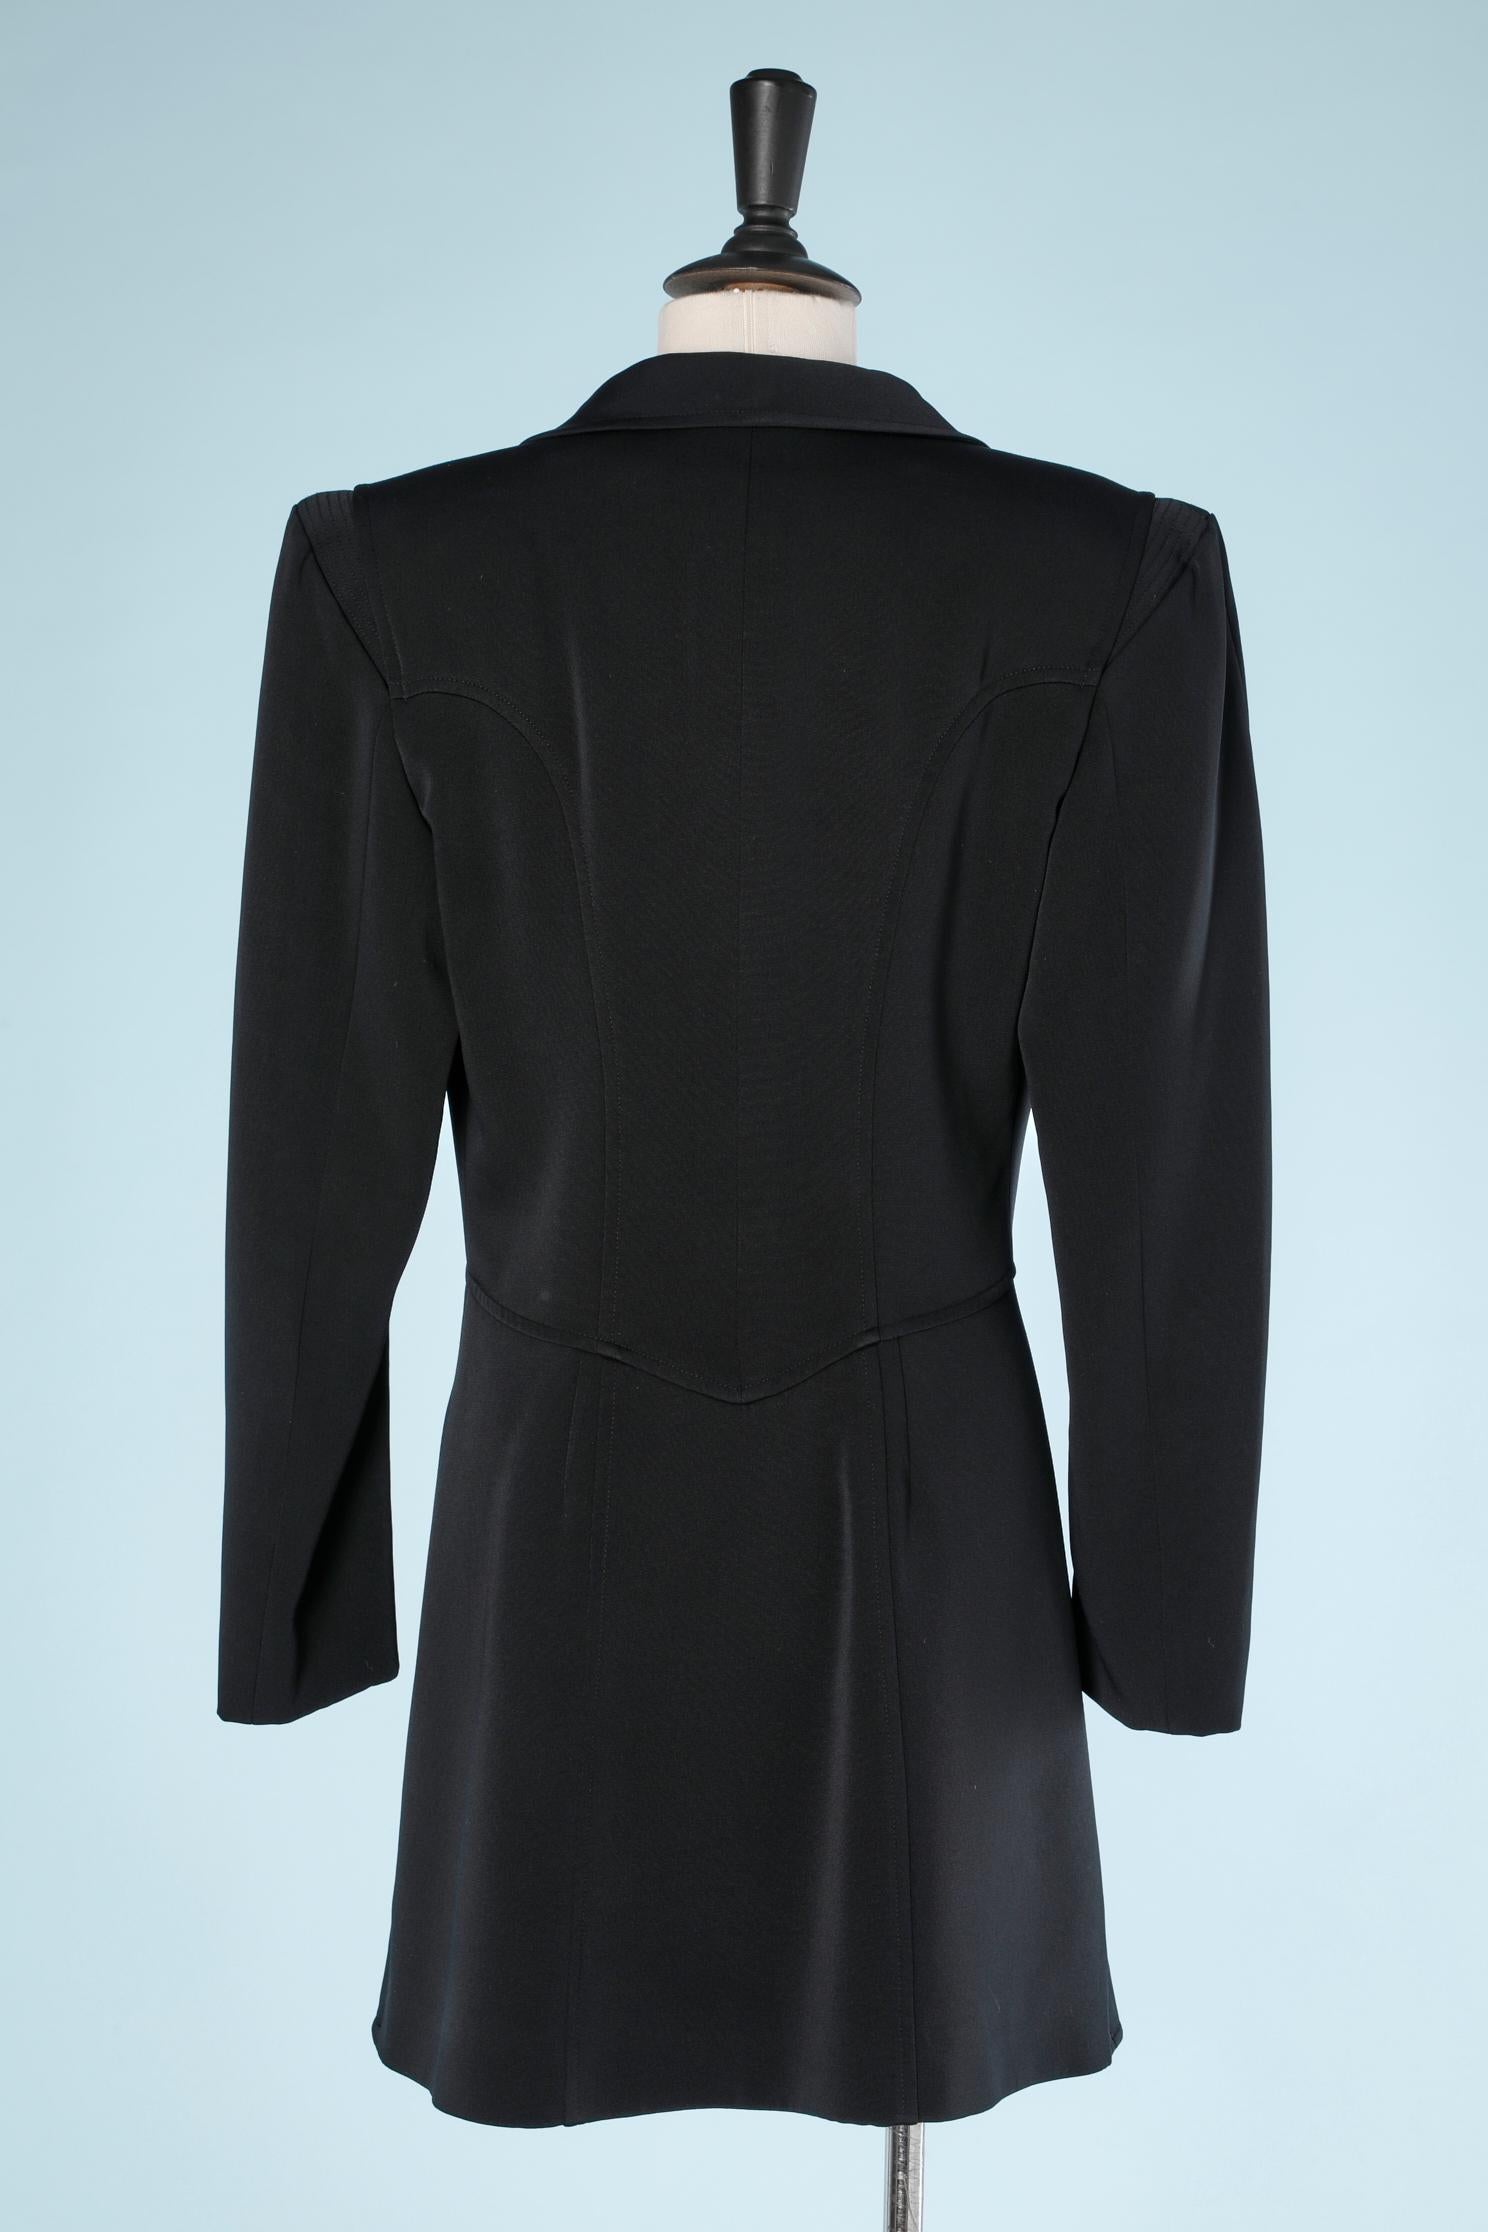 Women's Black blazer with gold metal button Christian Lacroix  For Sale